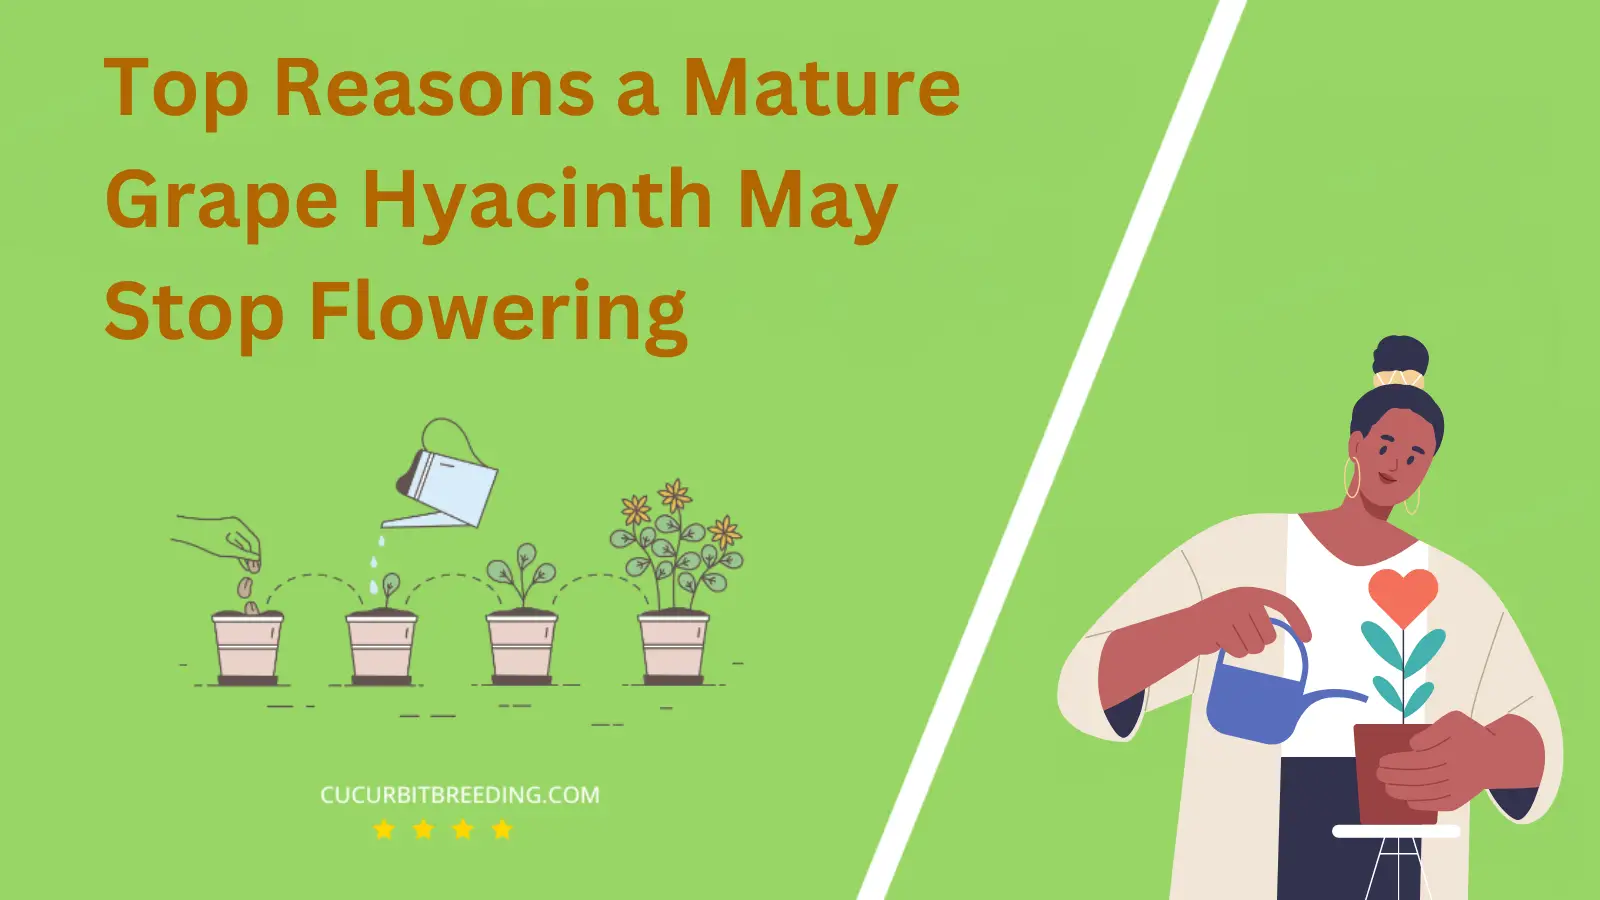 Top Reasons a Mature Grape Hyacinth May Stop Flowering